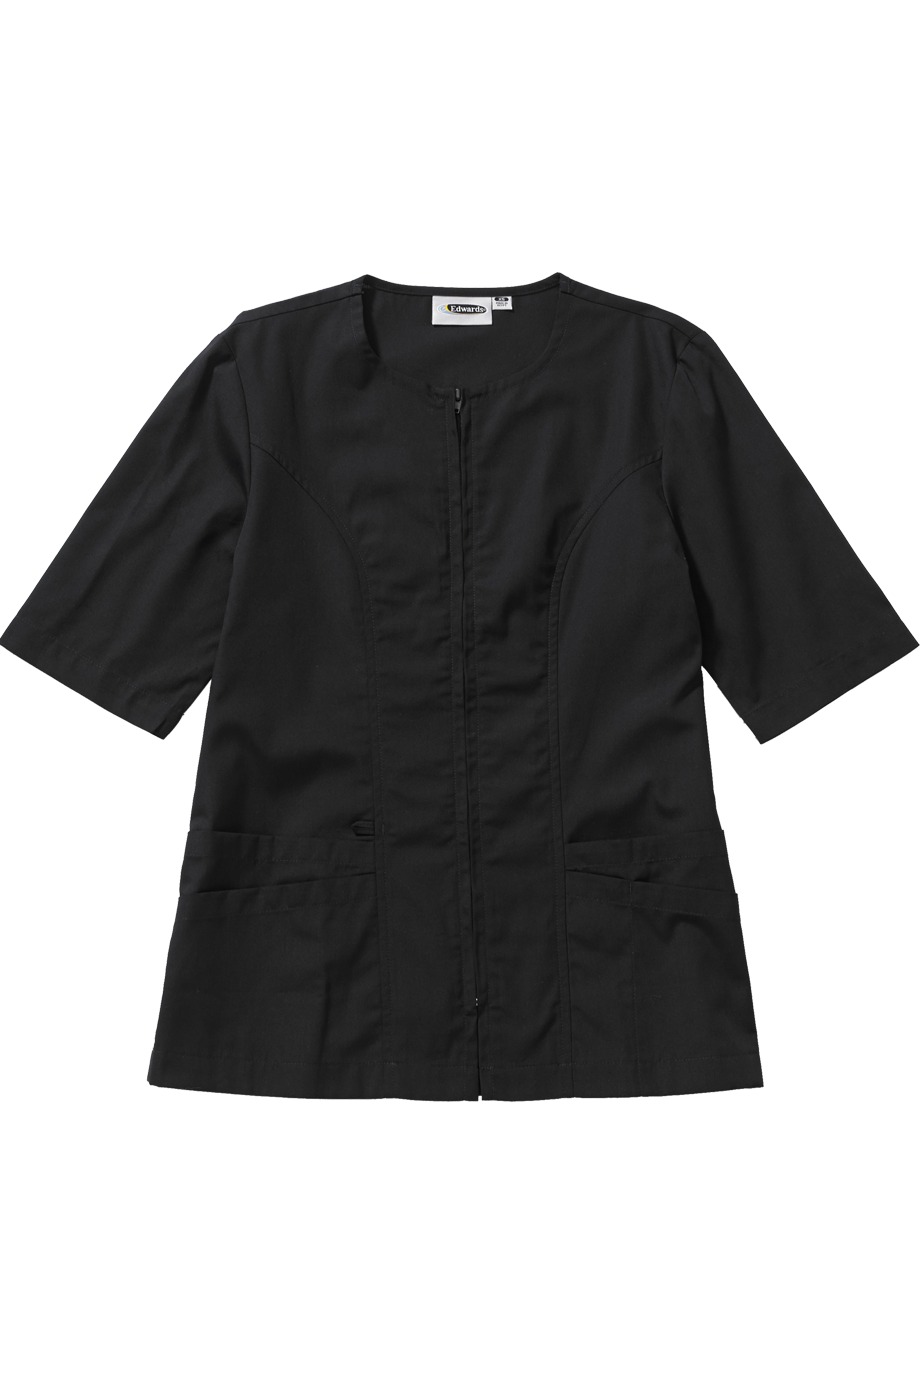 Edwards Garment 7887 - Housekeeping Zip Tunic